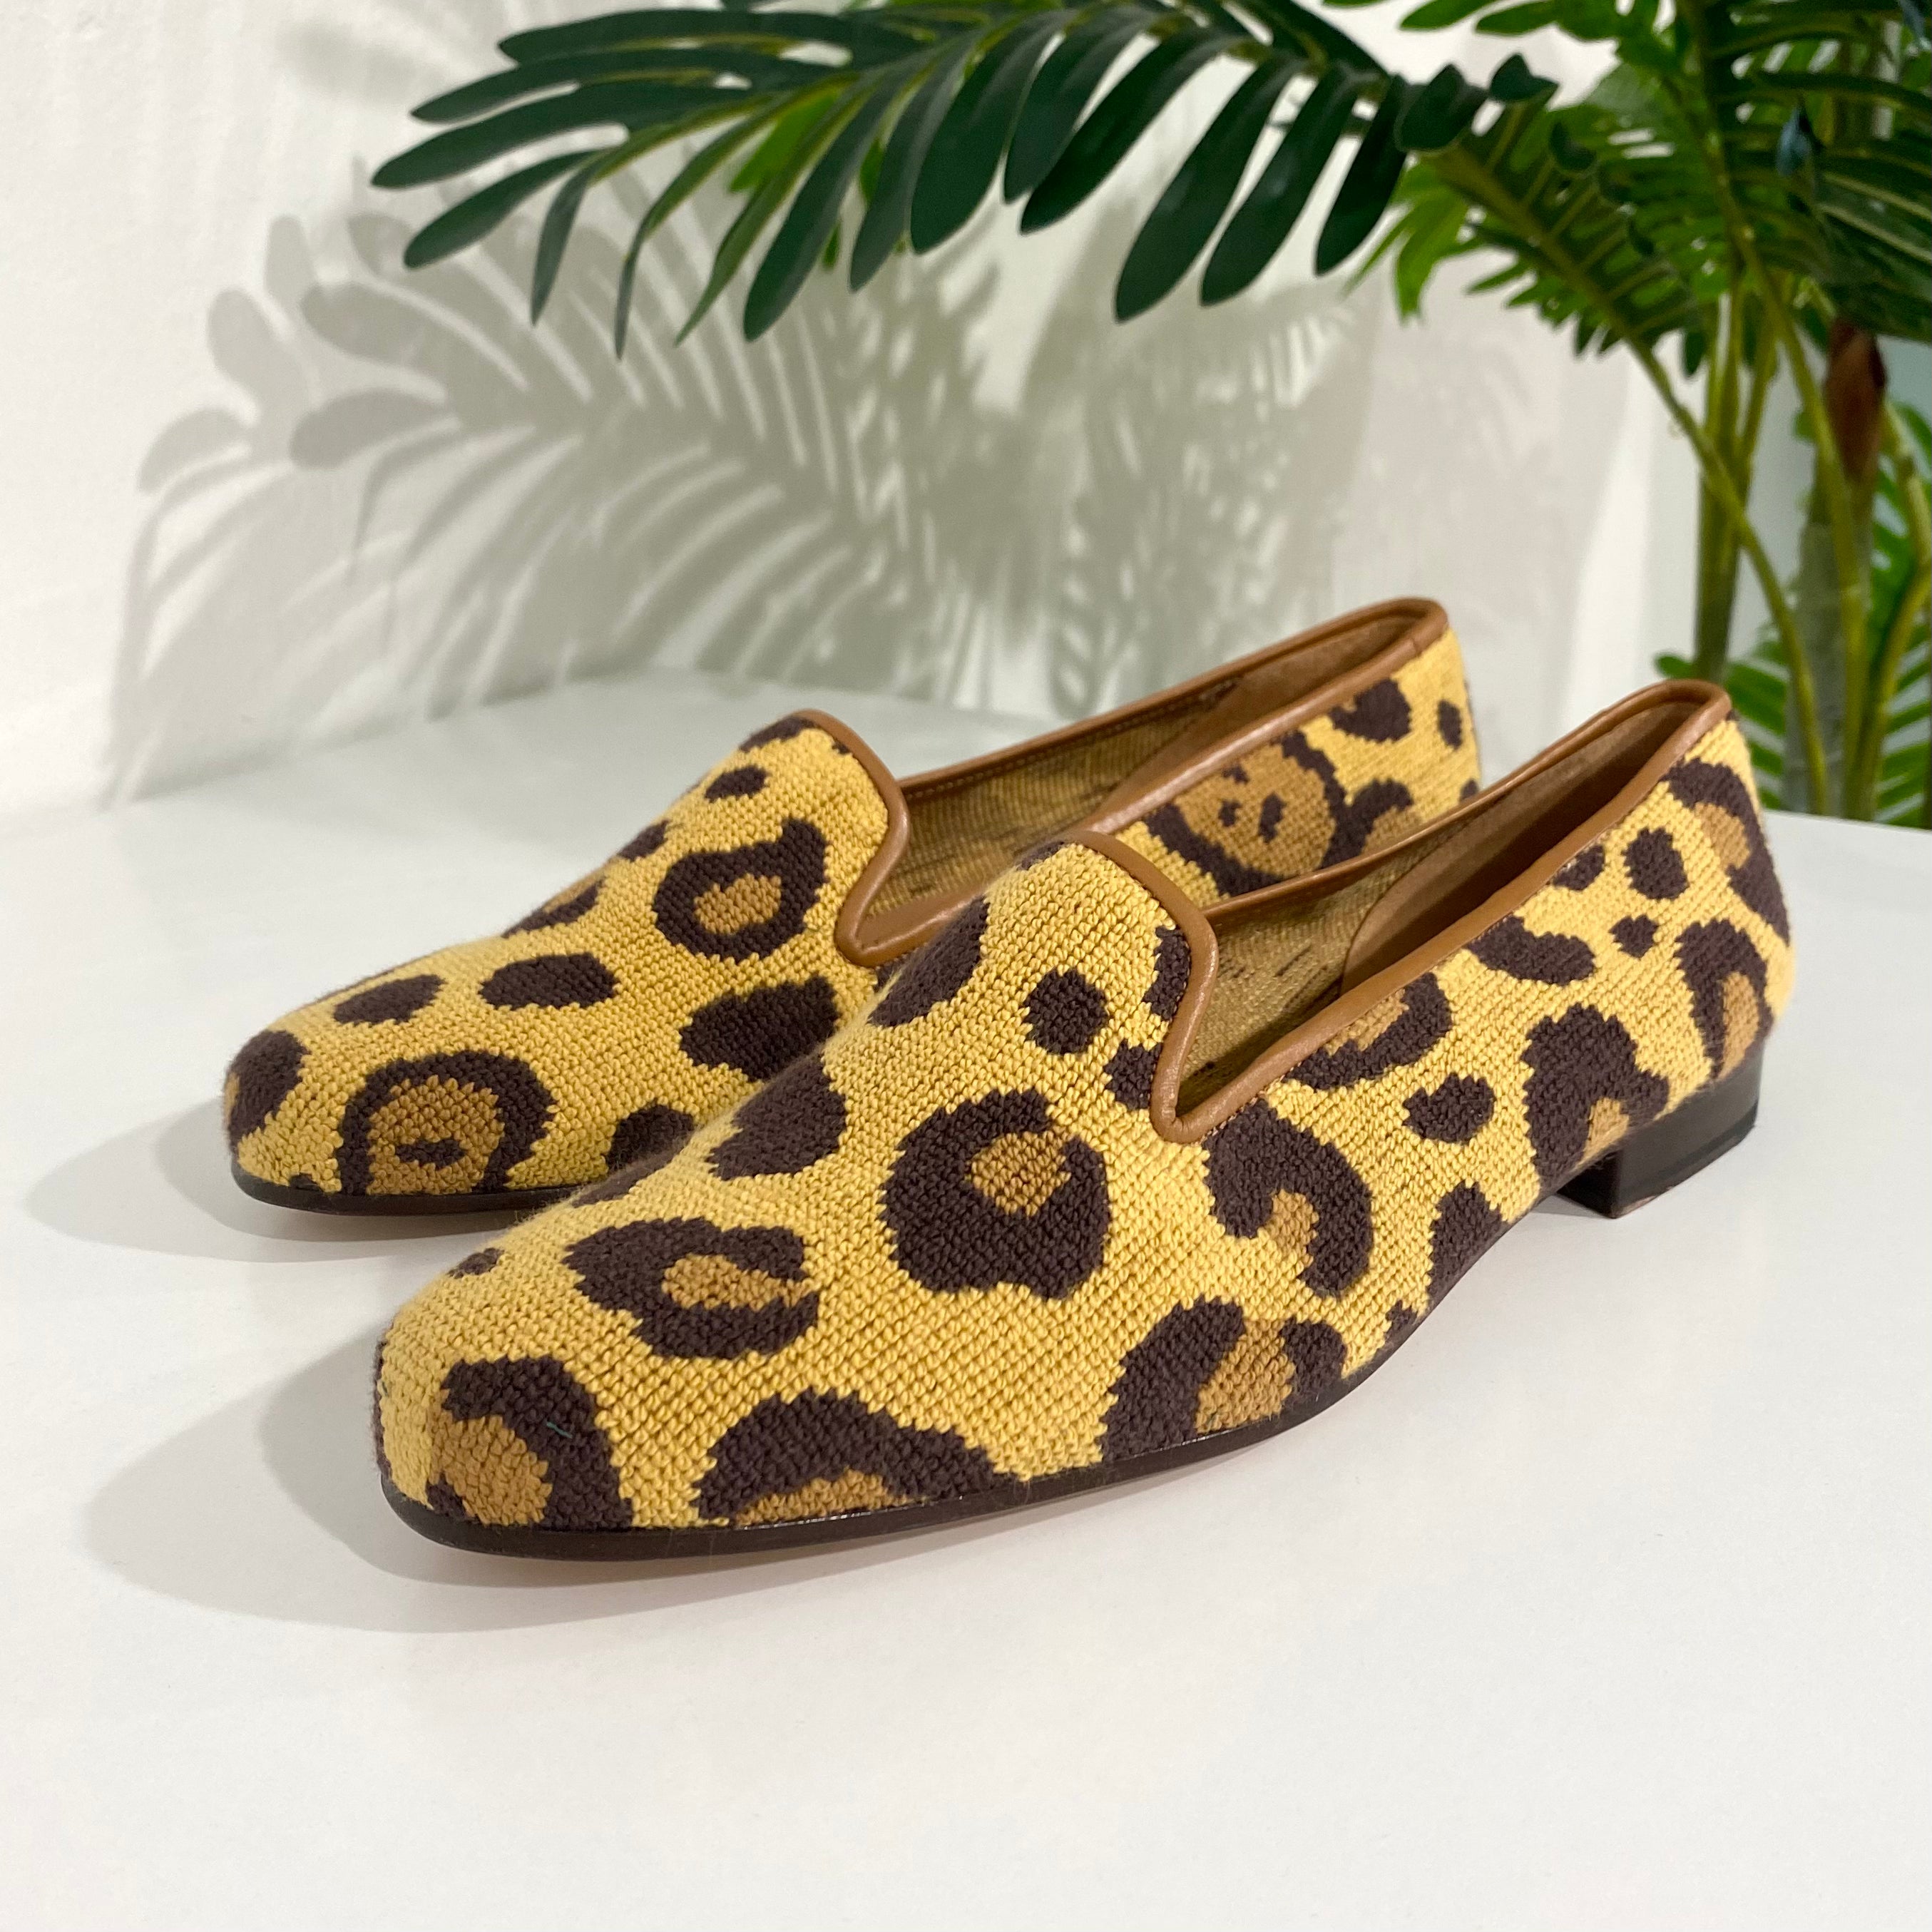 Stubbs & Wootton Leopard Loafers size 10